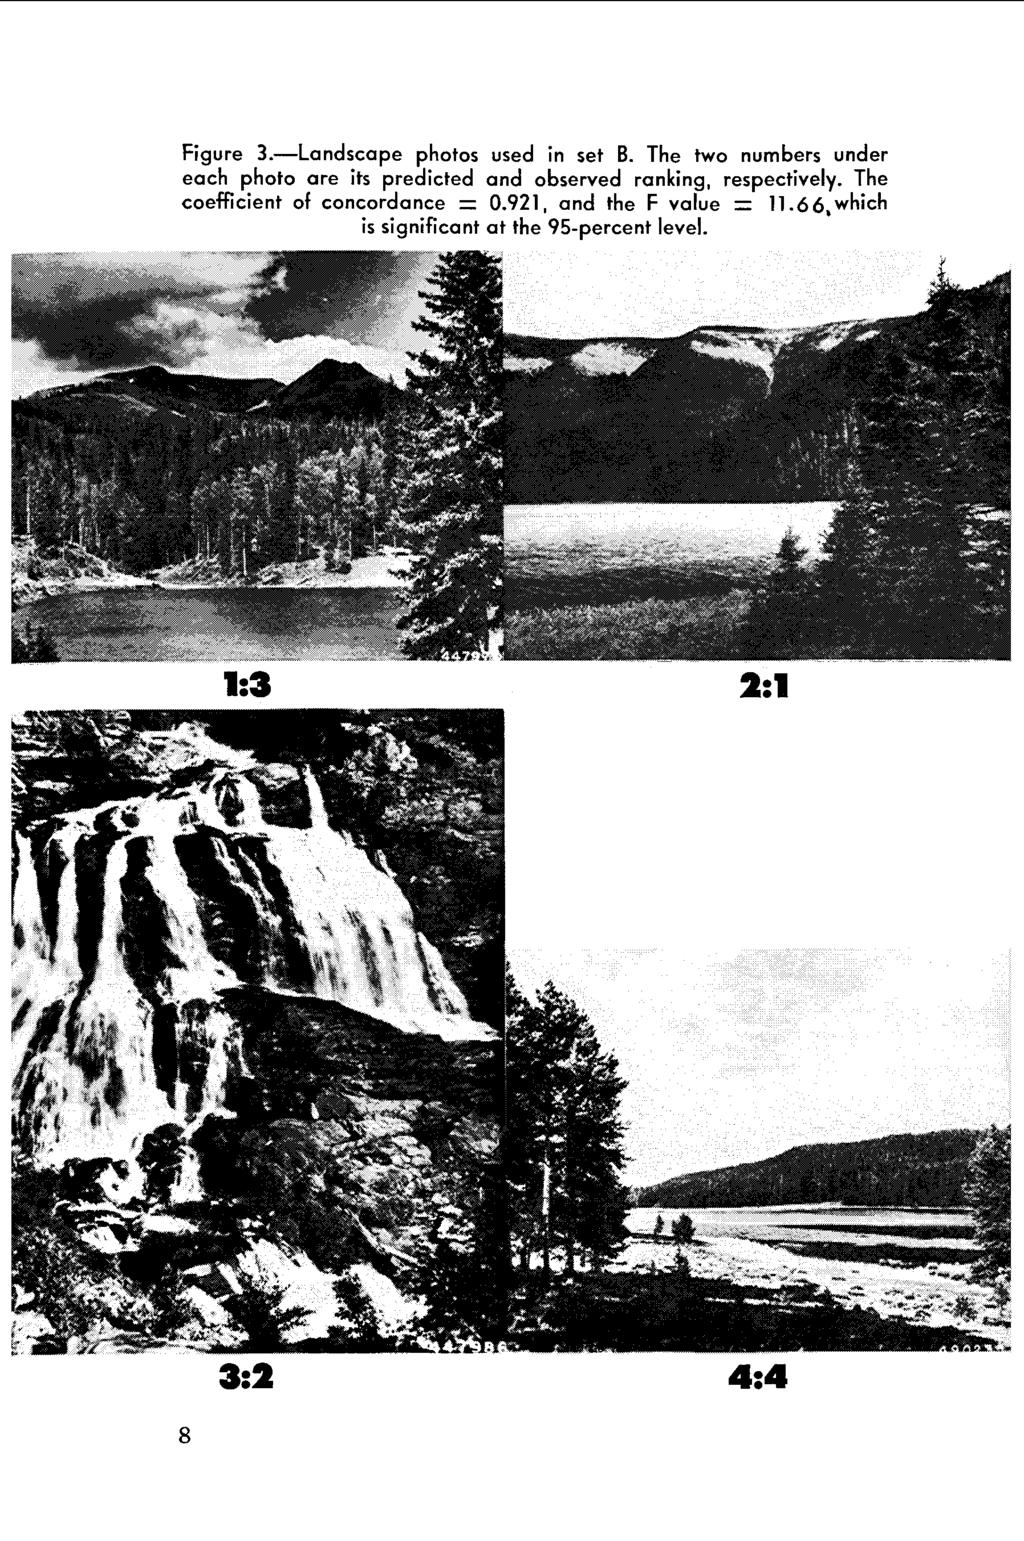 Figure 3.-Landscape photos used in set B.